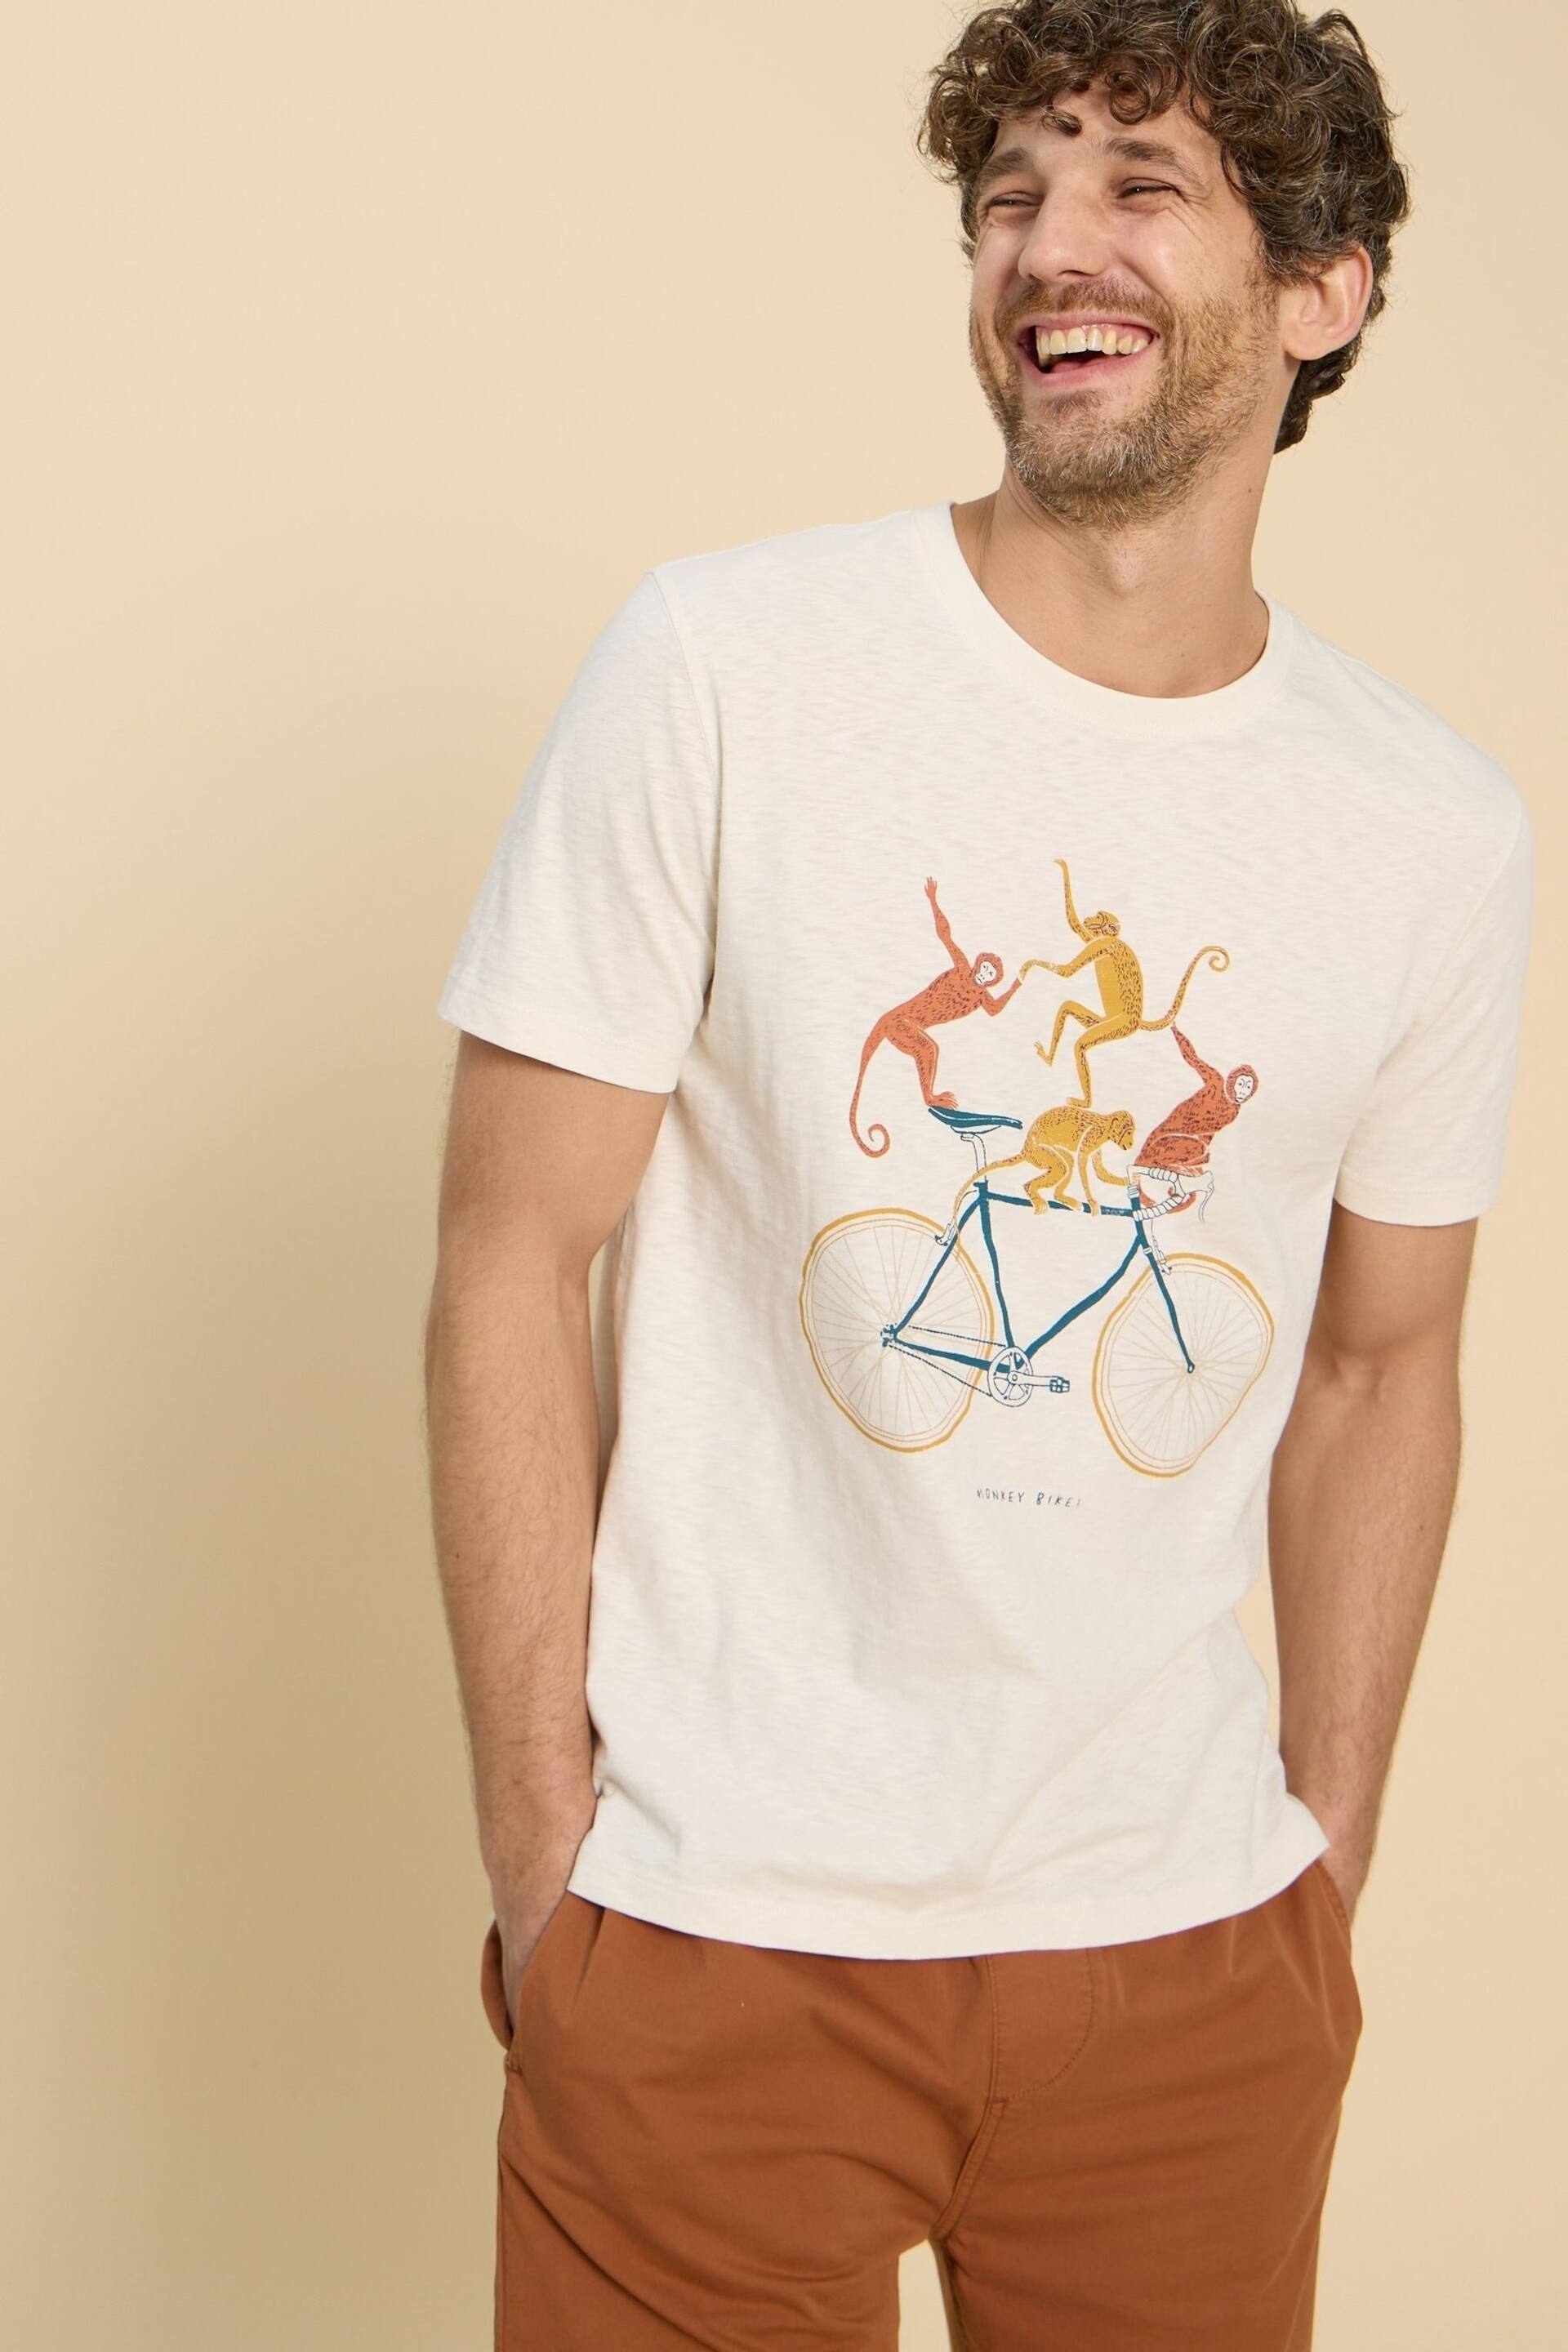 White Stuff White Monkey On A Bike Graphic T-Shirt - Image 1 of 7